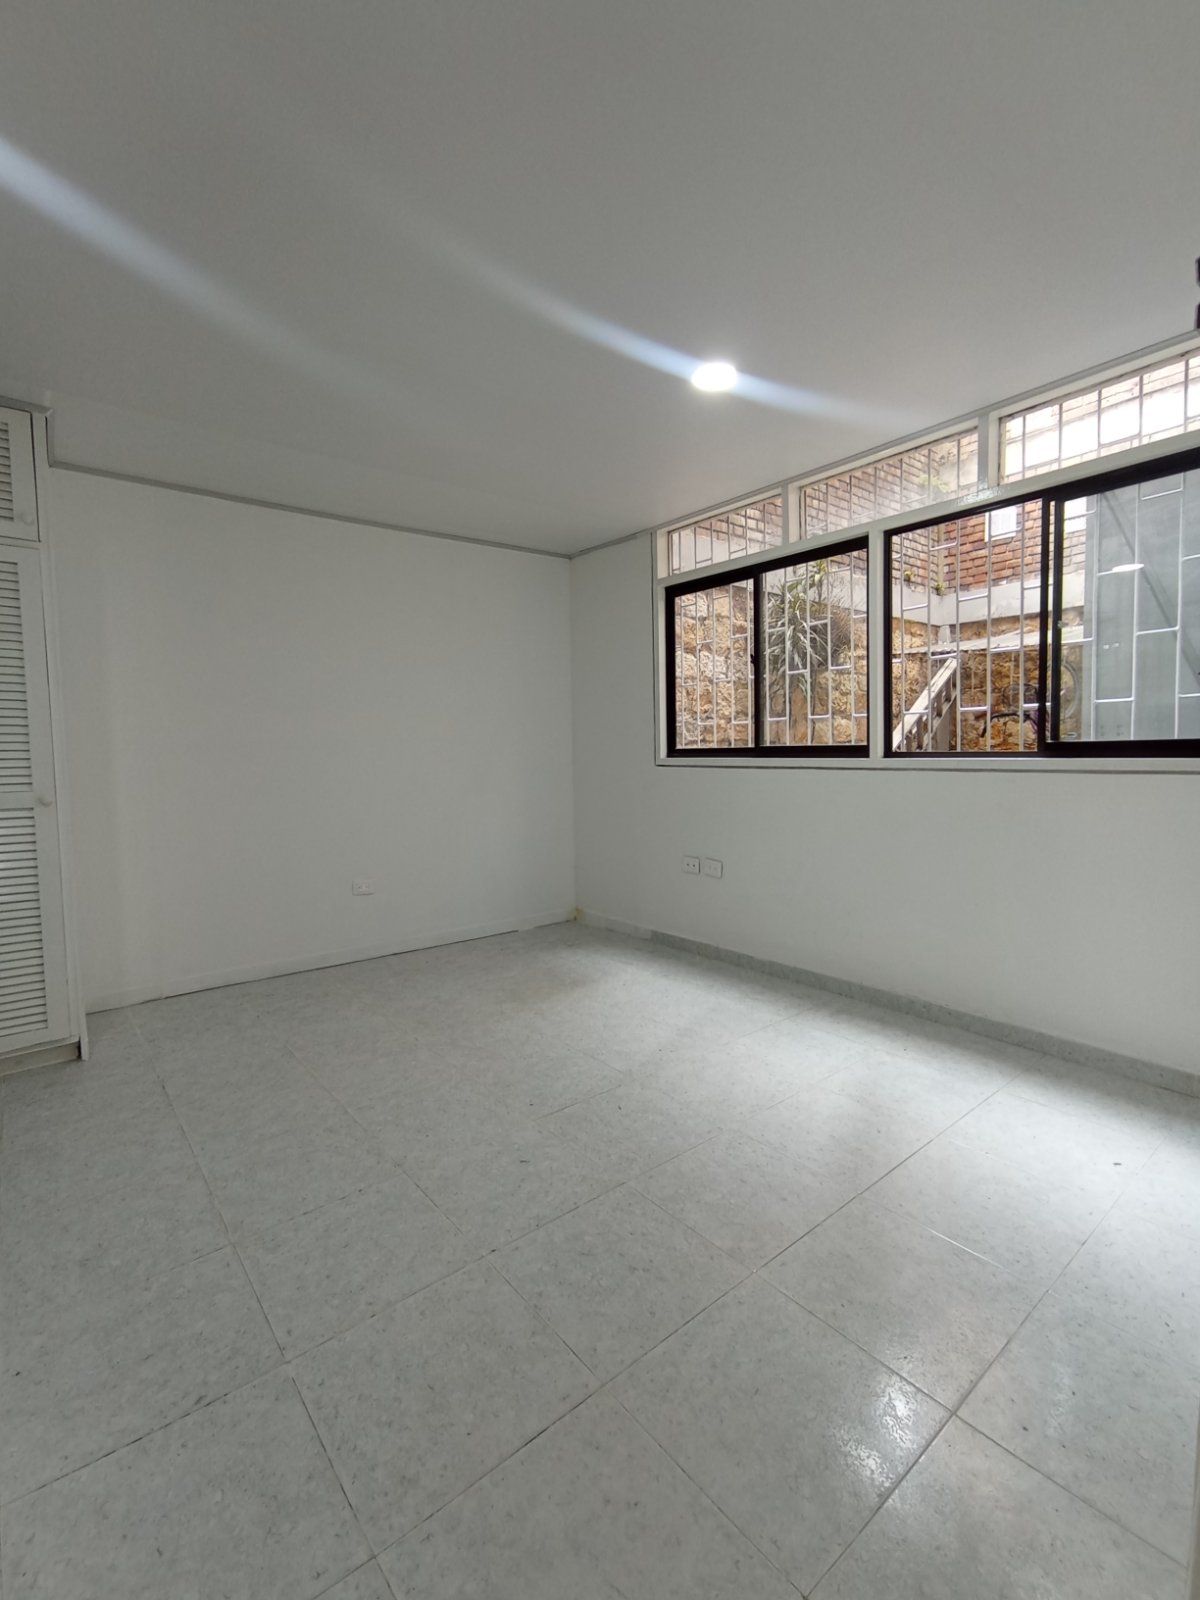 Apartamento en arriendo Pardo Rubio 26 m² - $ 1.130.000